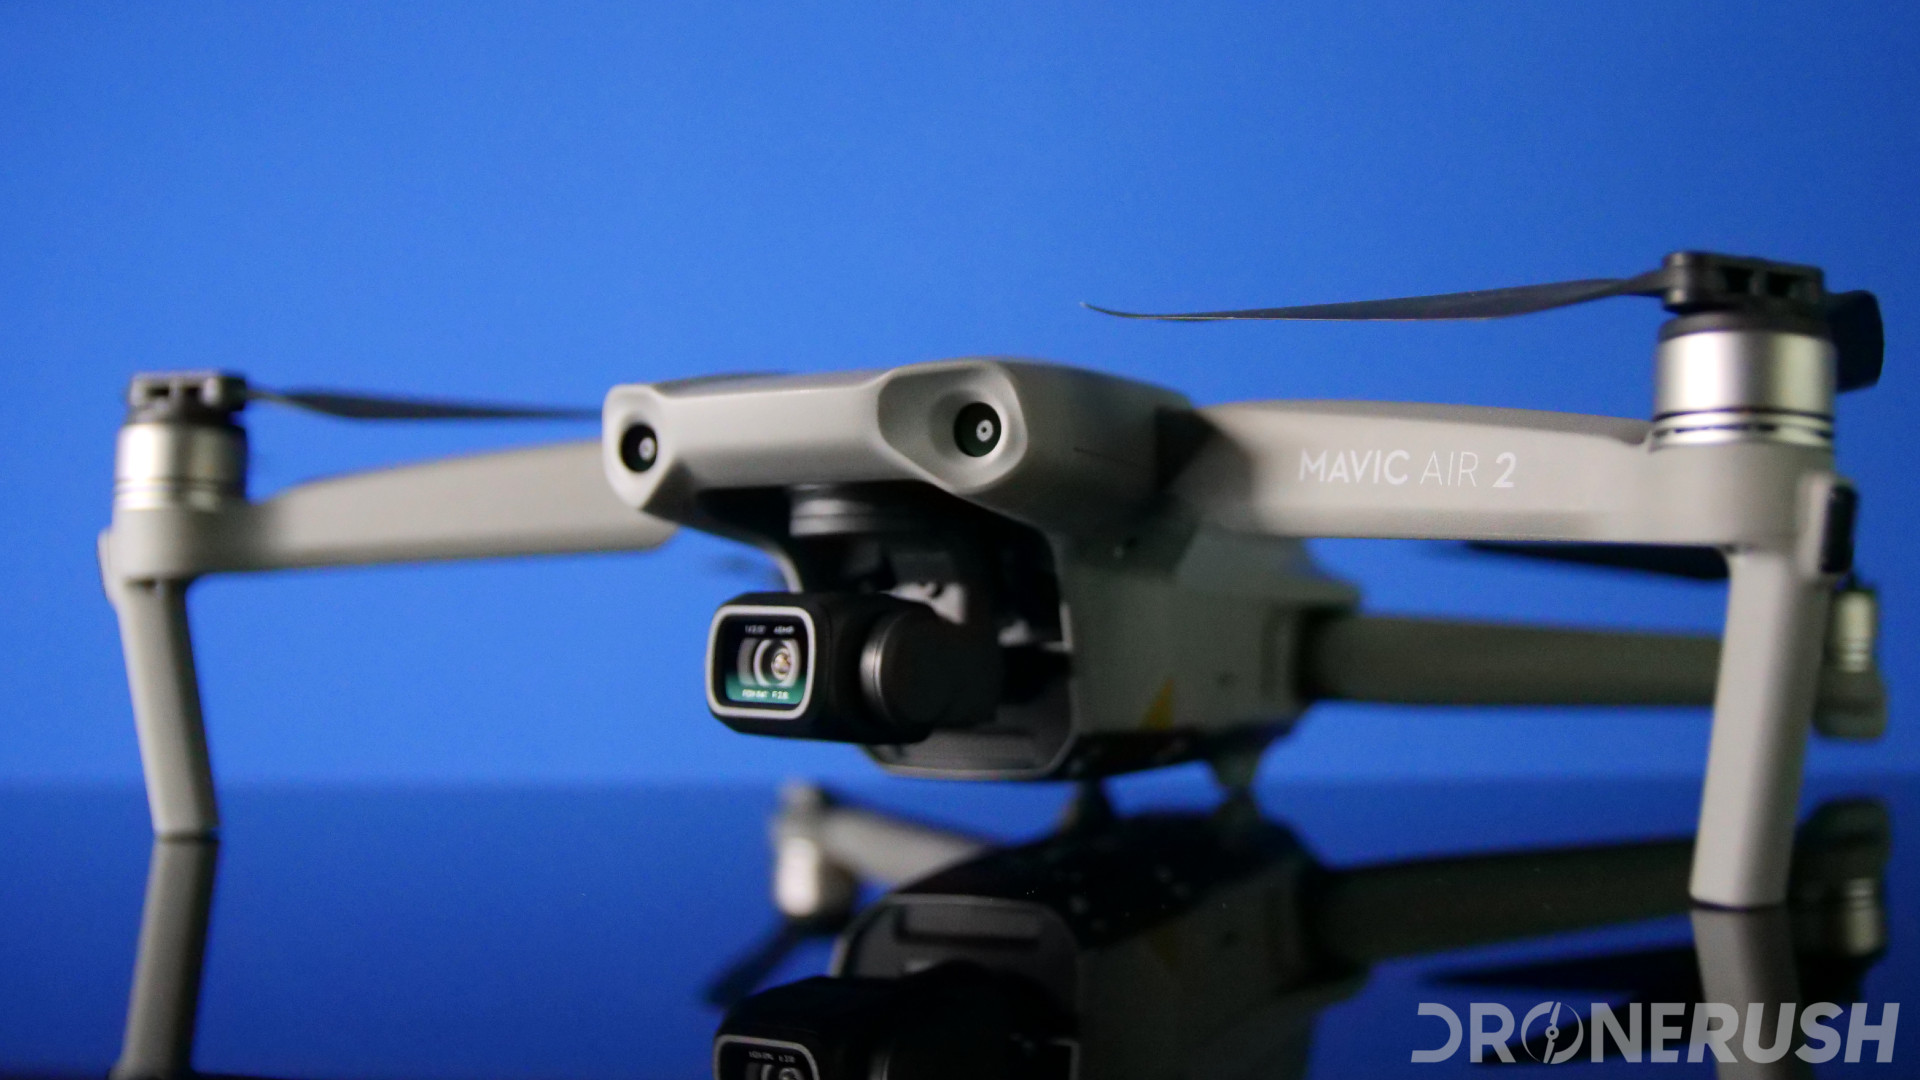 DJI Mavic Air 2 review - Hard to beat - Drone Rush